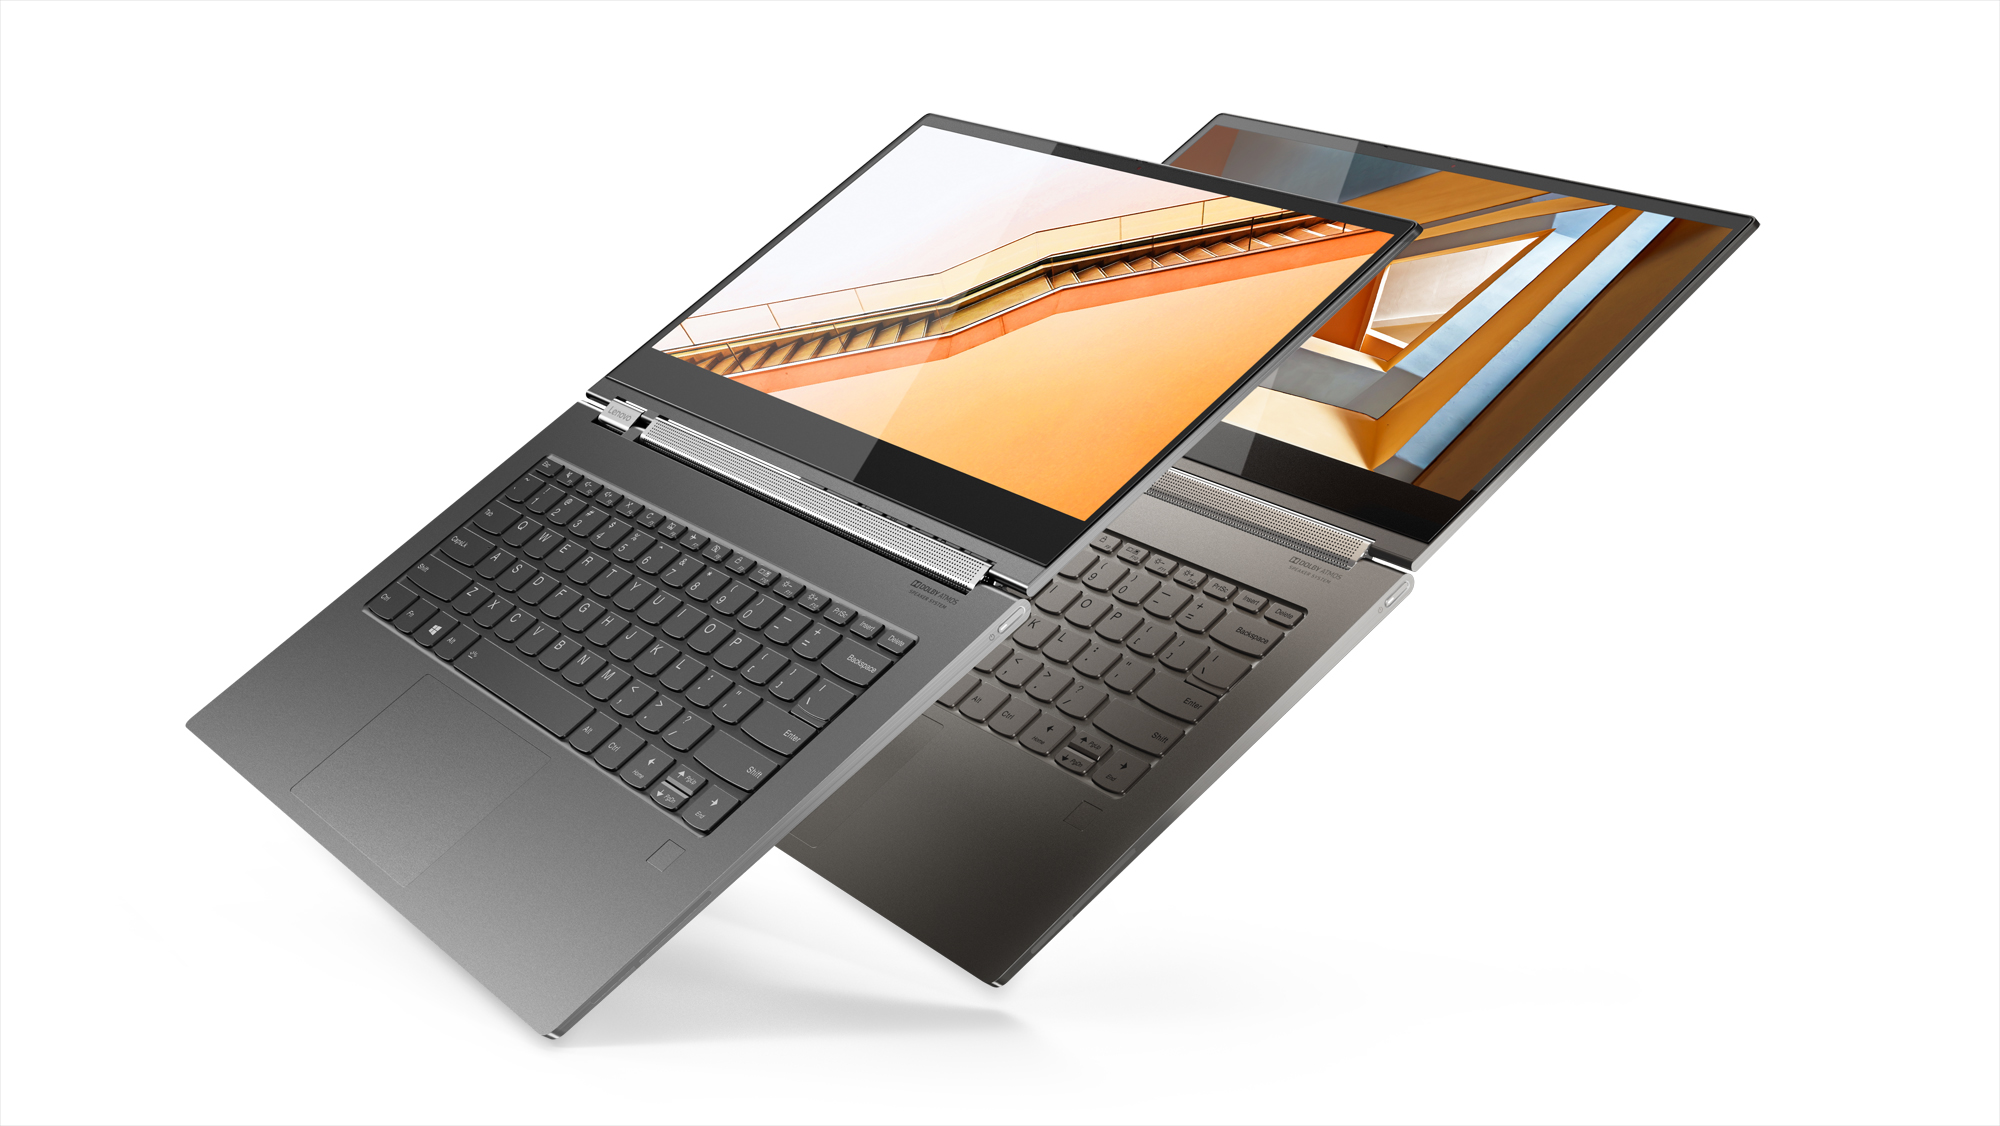 Lenovo Yoga C930 And Yoga Book C930 Redefine Lenovo S Flagship